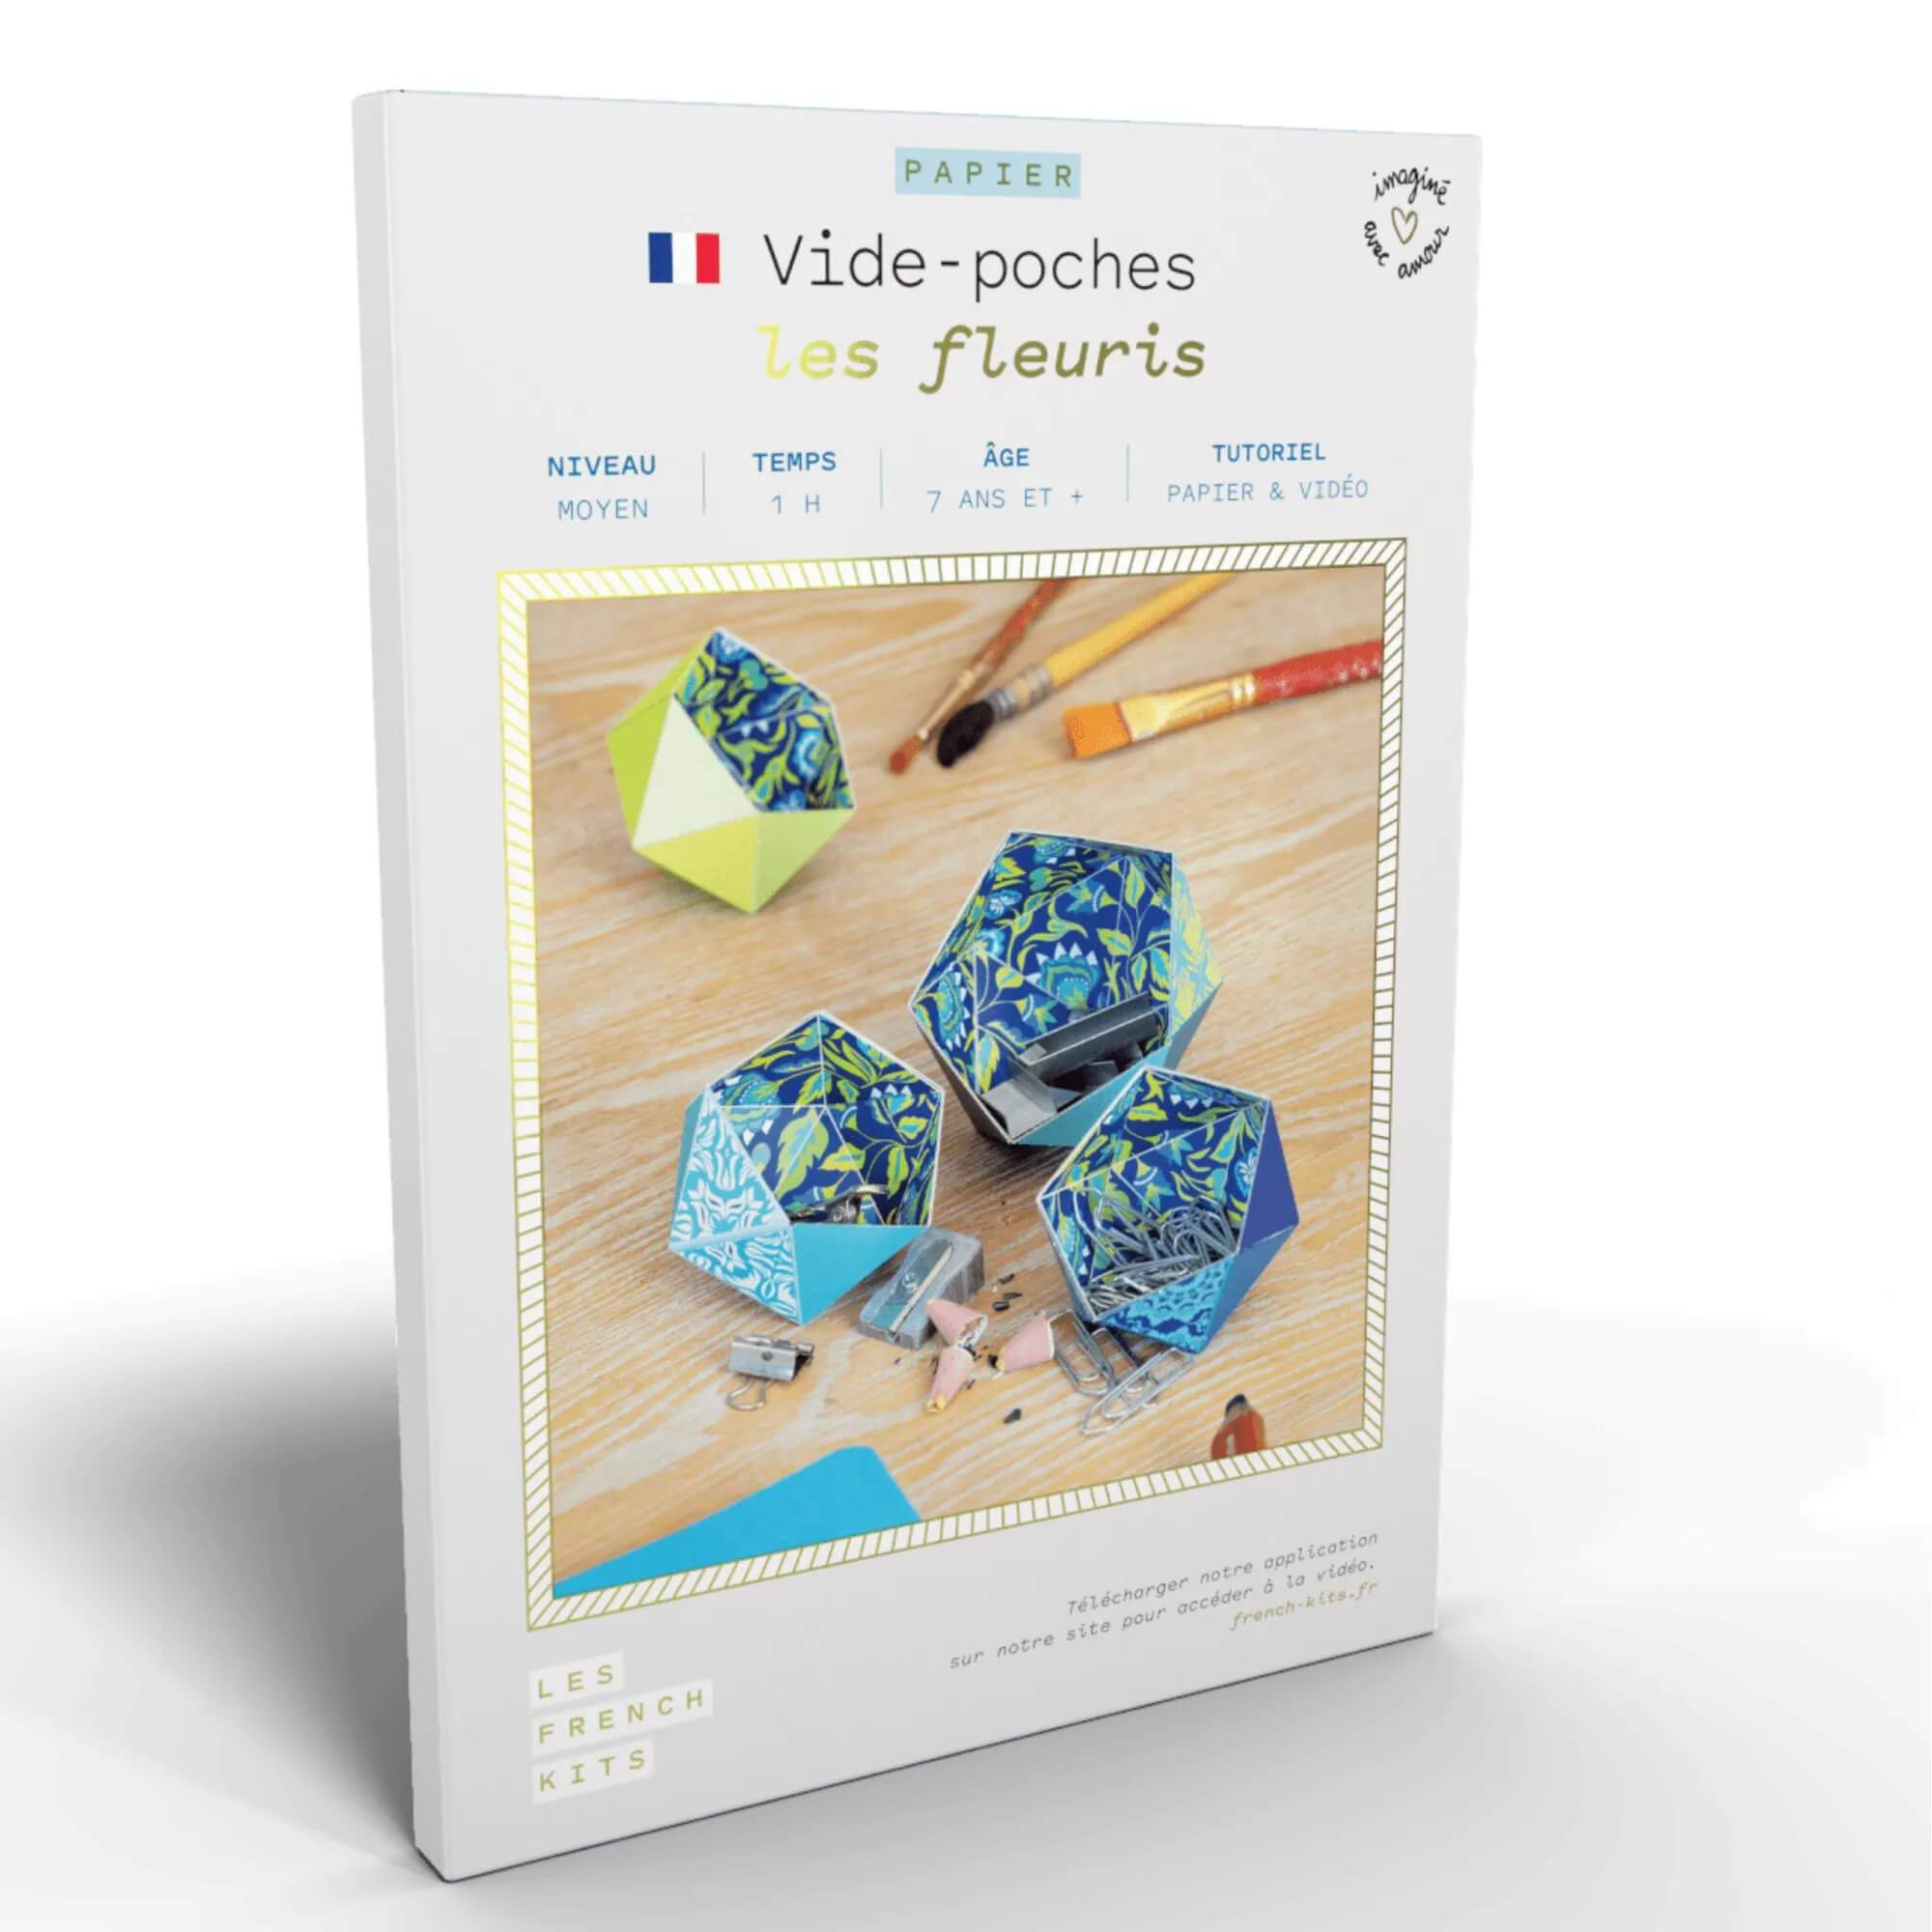 Les fleuris - Vide-poches DIY Les French Kits 